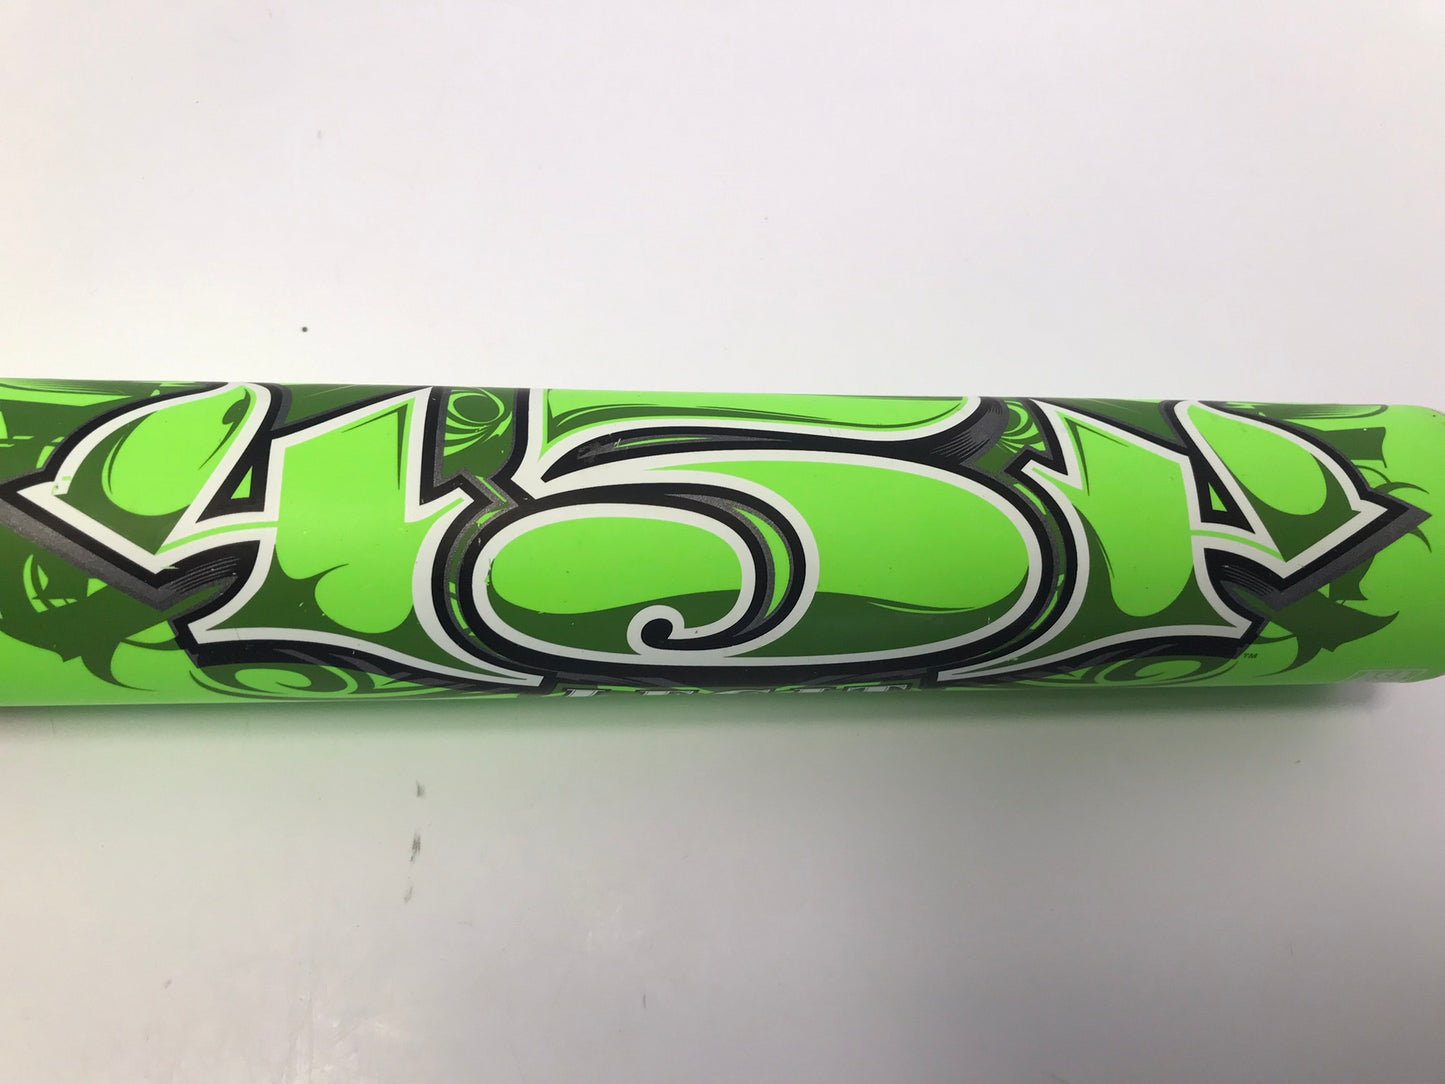 Baseball Bat 34 inch 26 oz Worth 454 Legit 100 Anniversary Softball Lime Green Outstanding Quality